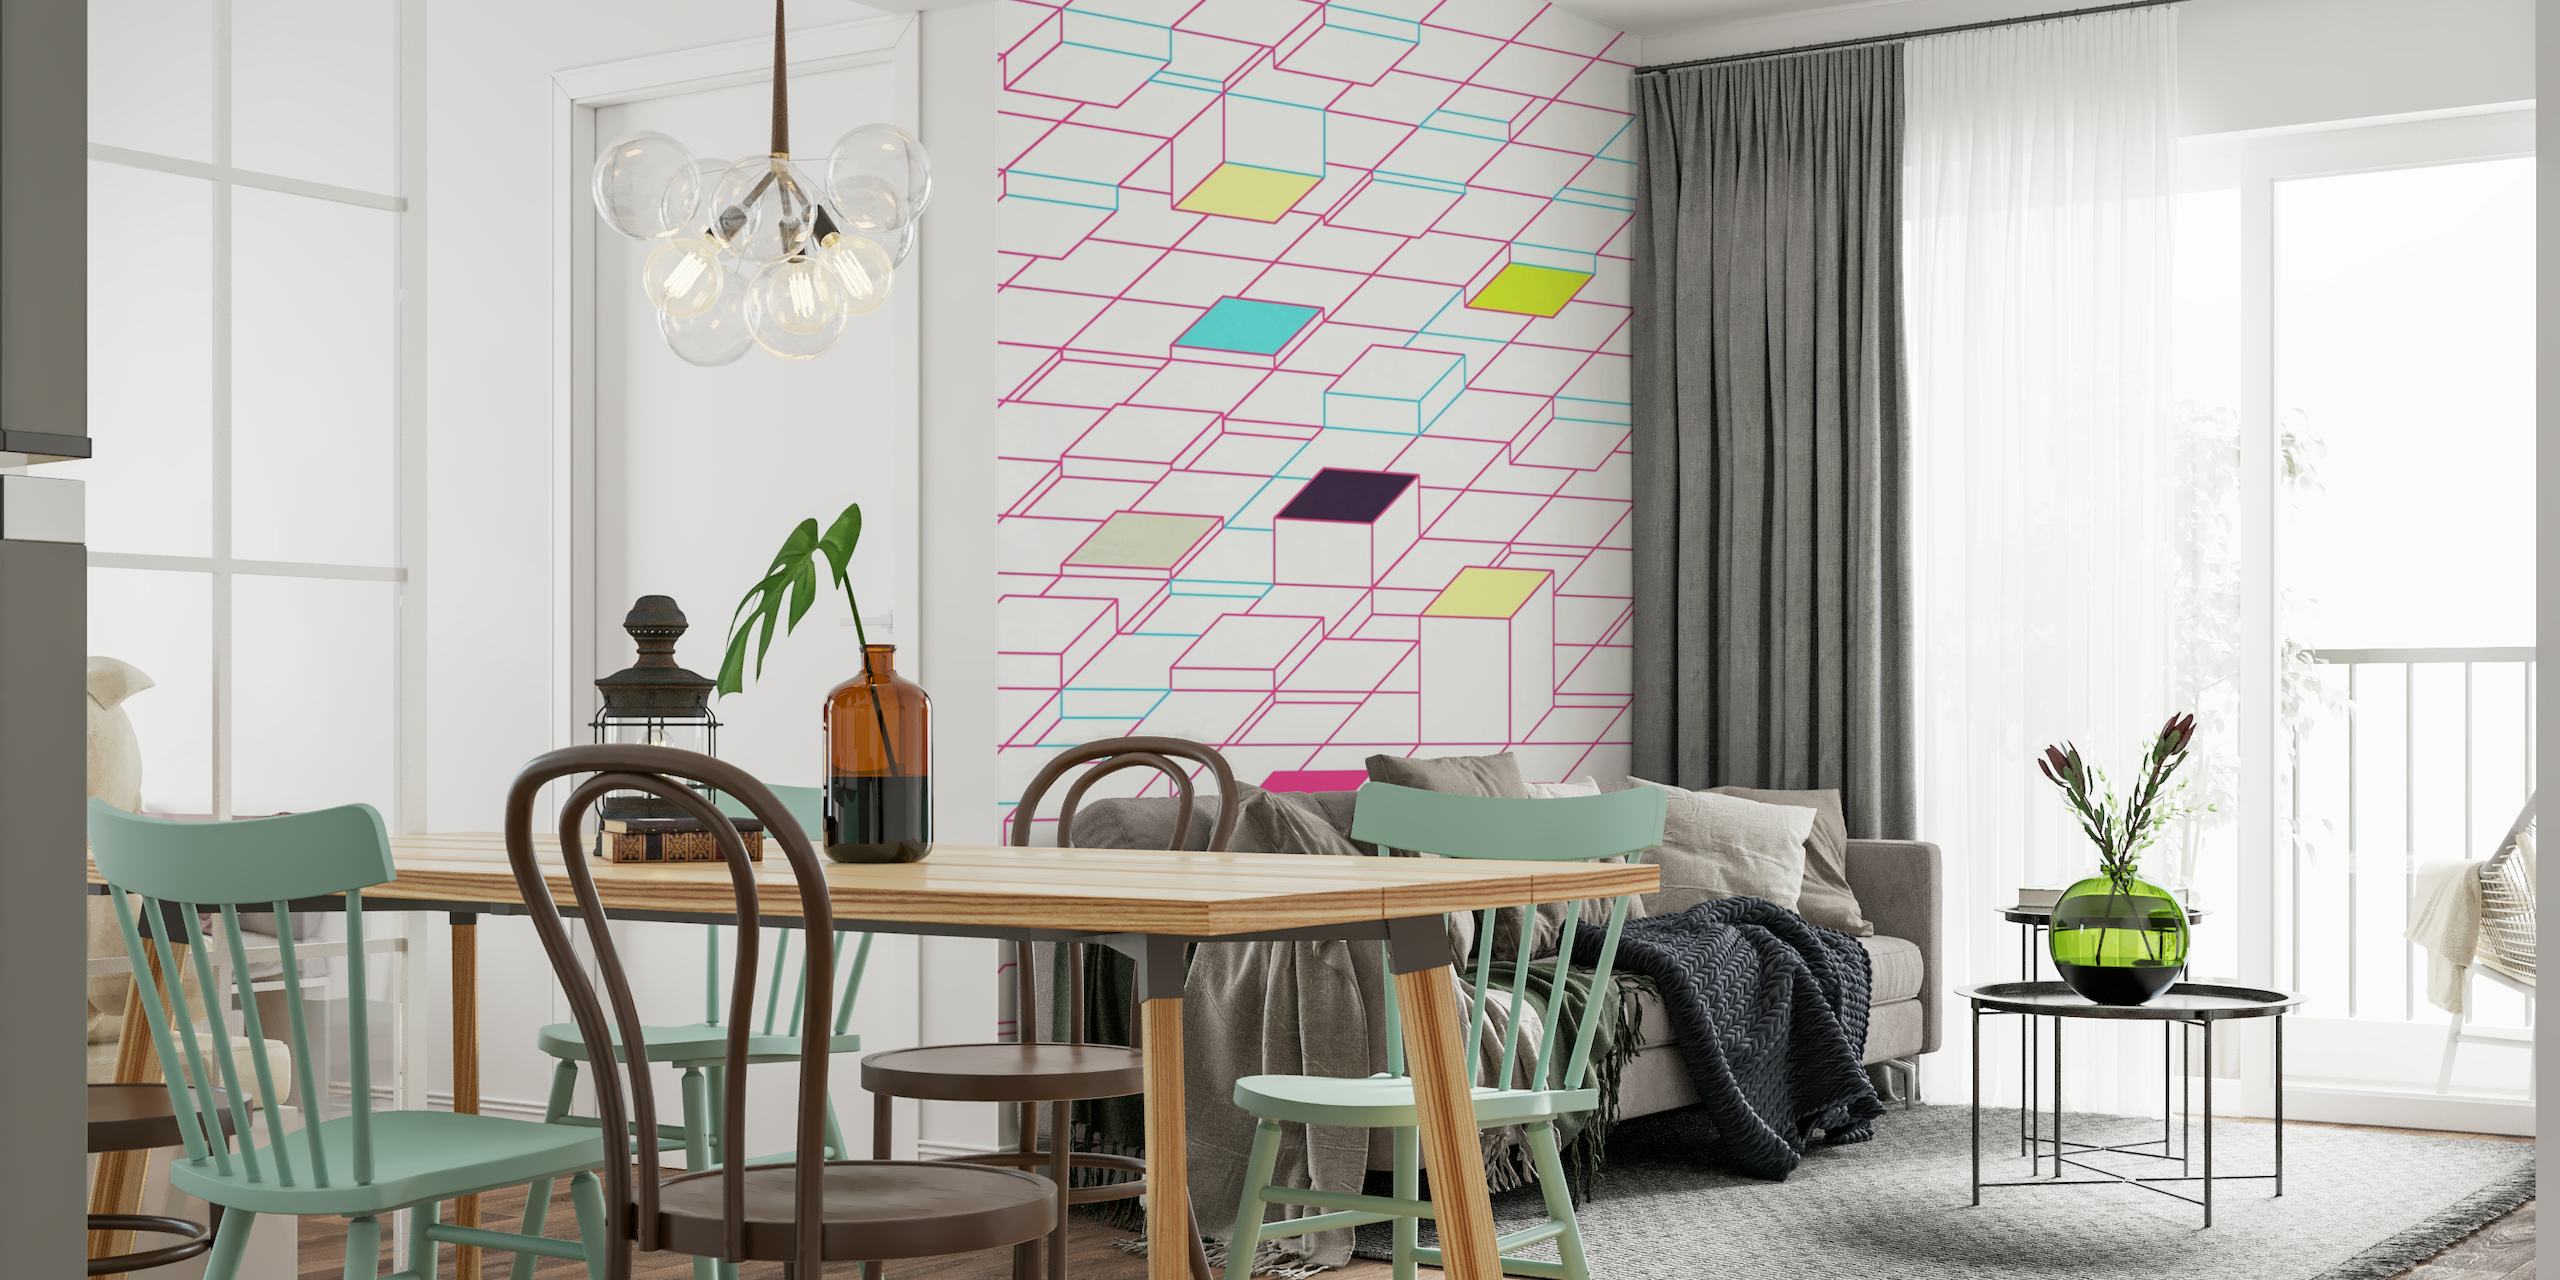 Cubes wallpaper